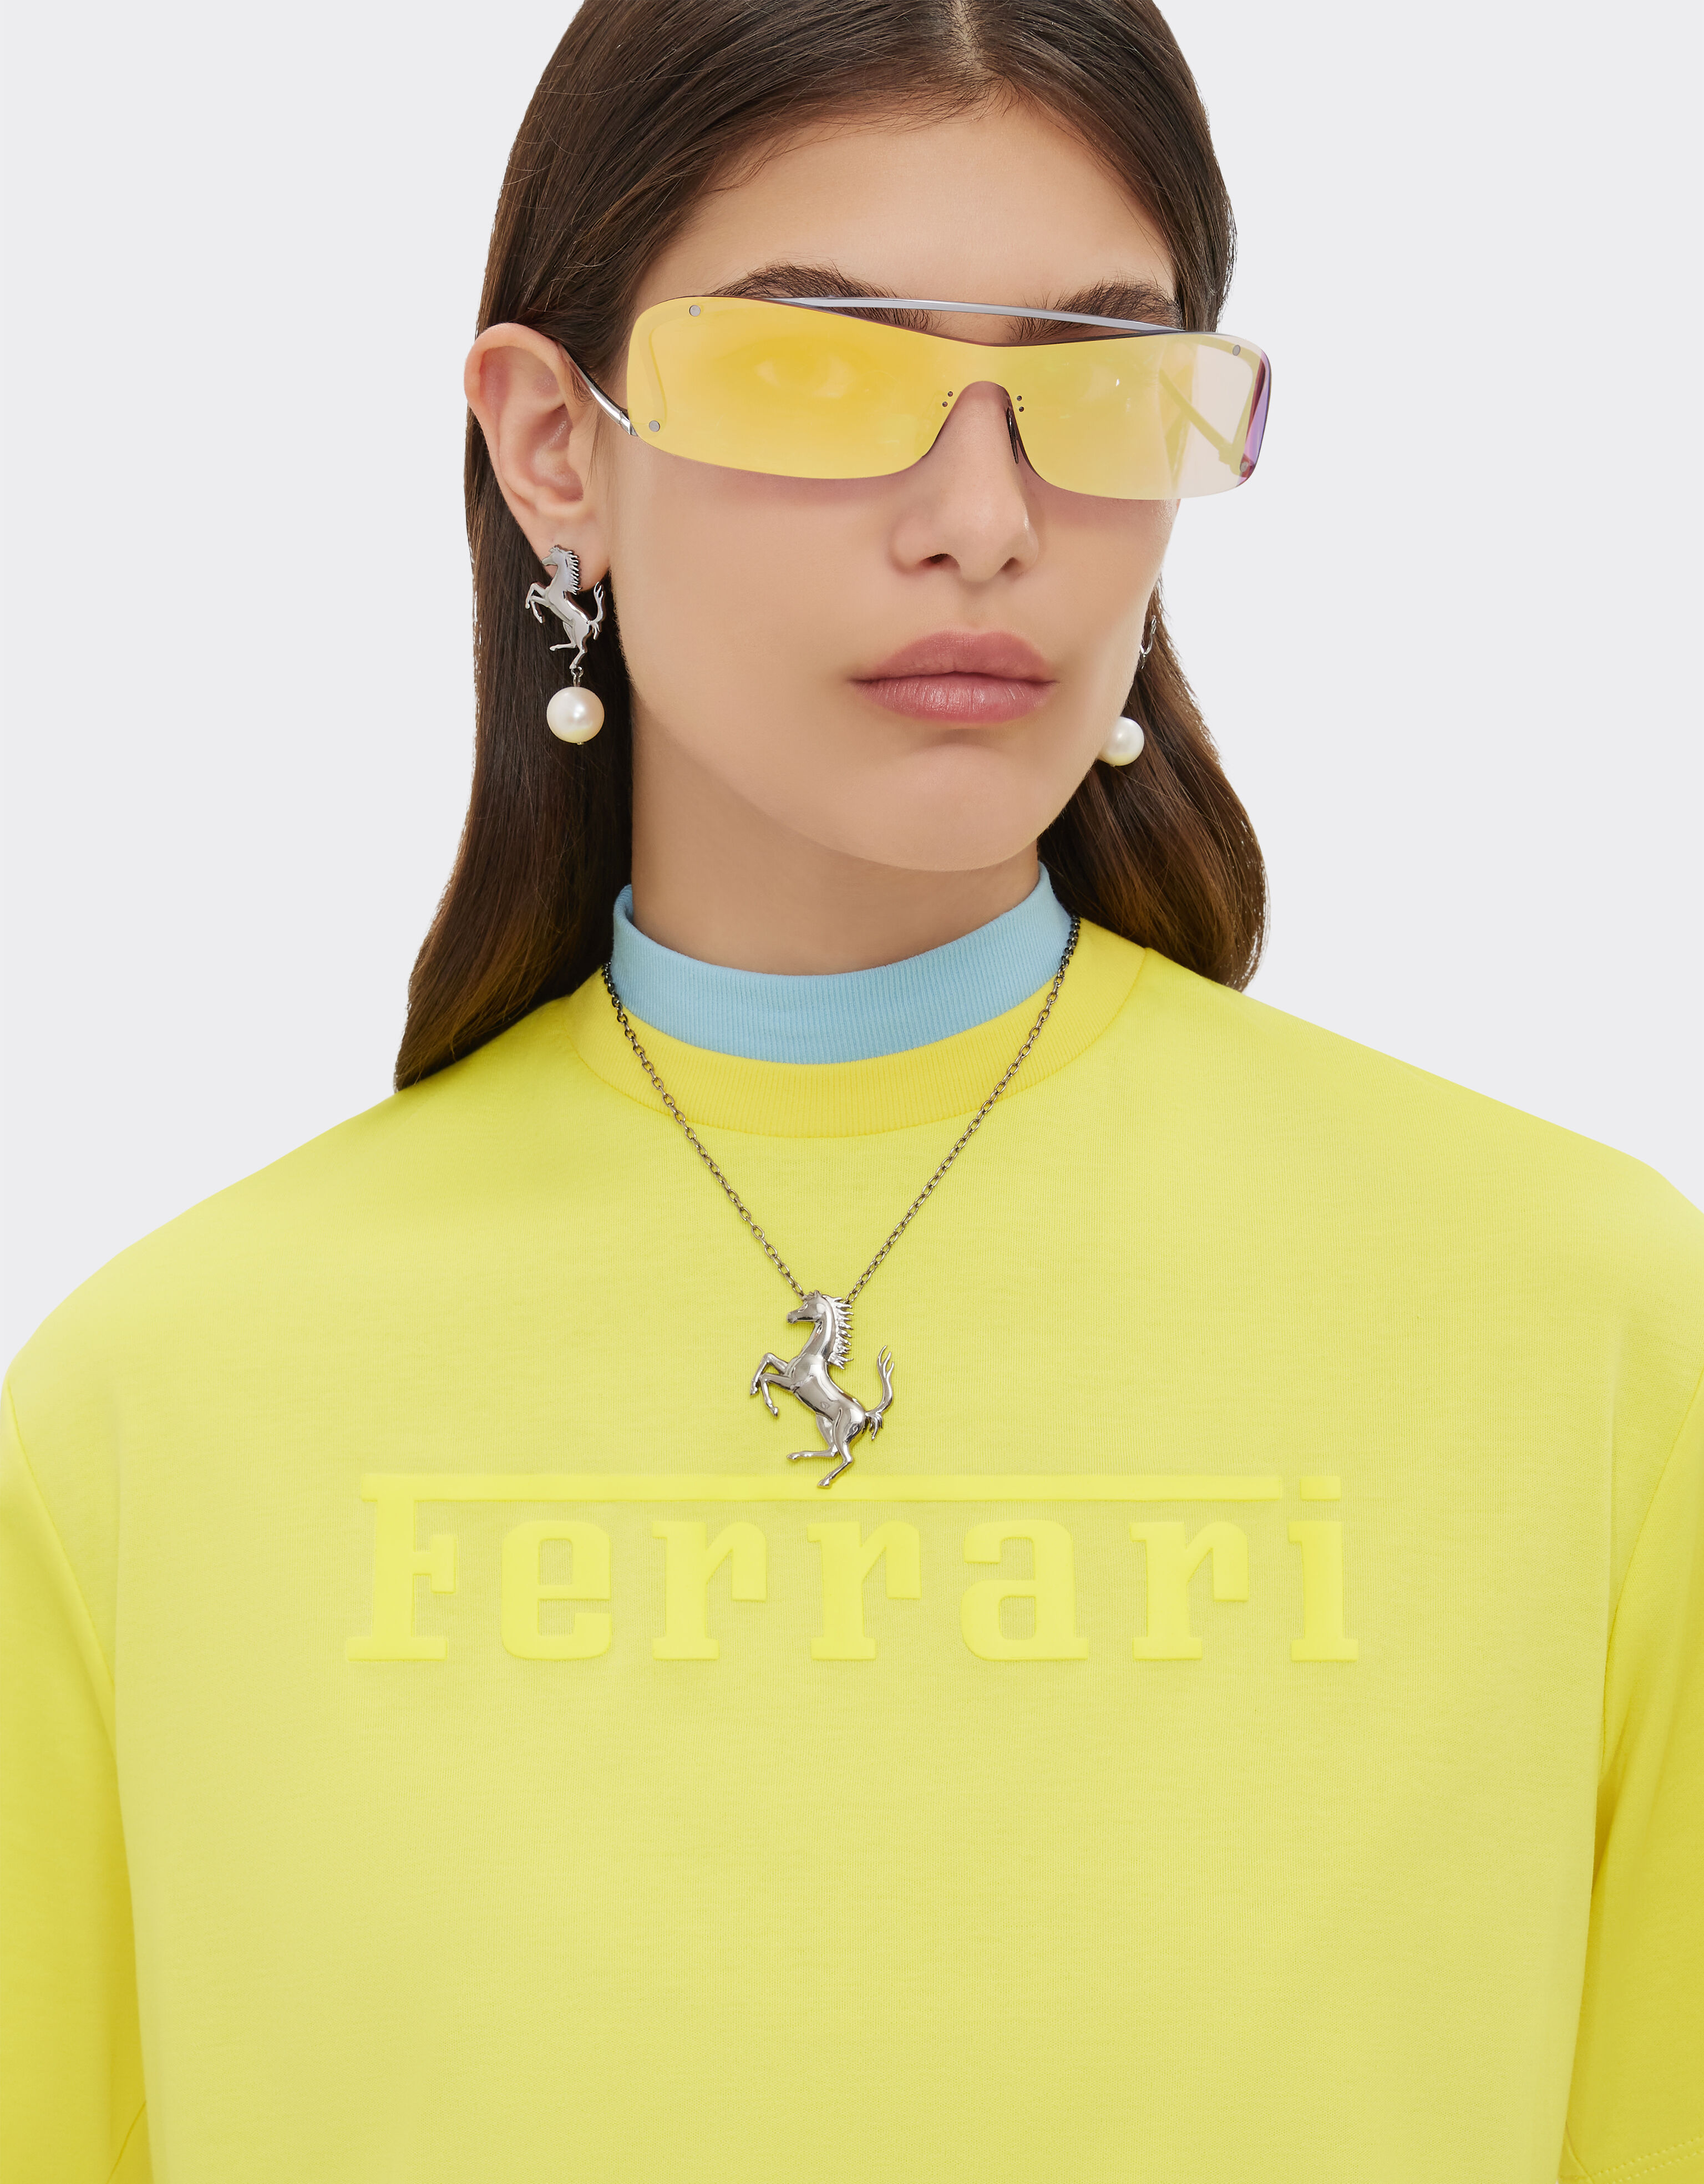 Ferrari 法拉利徽标棉质 T 恤 Giallo Modena 黄色 48115f